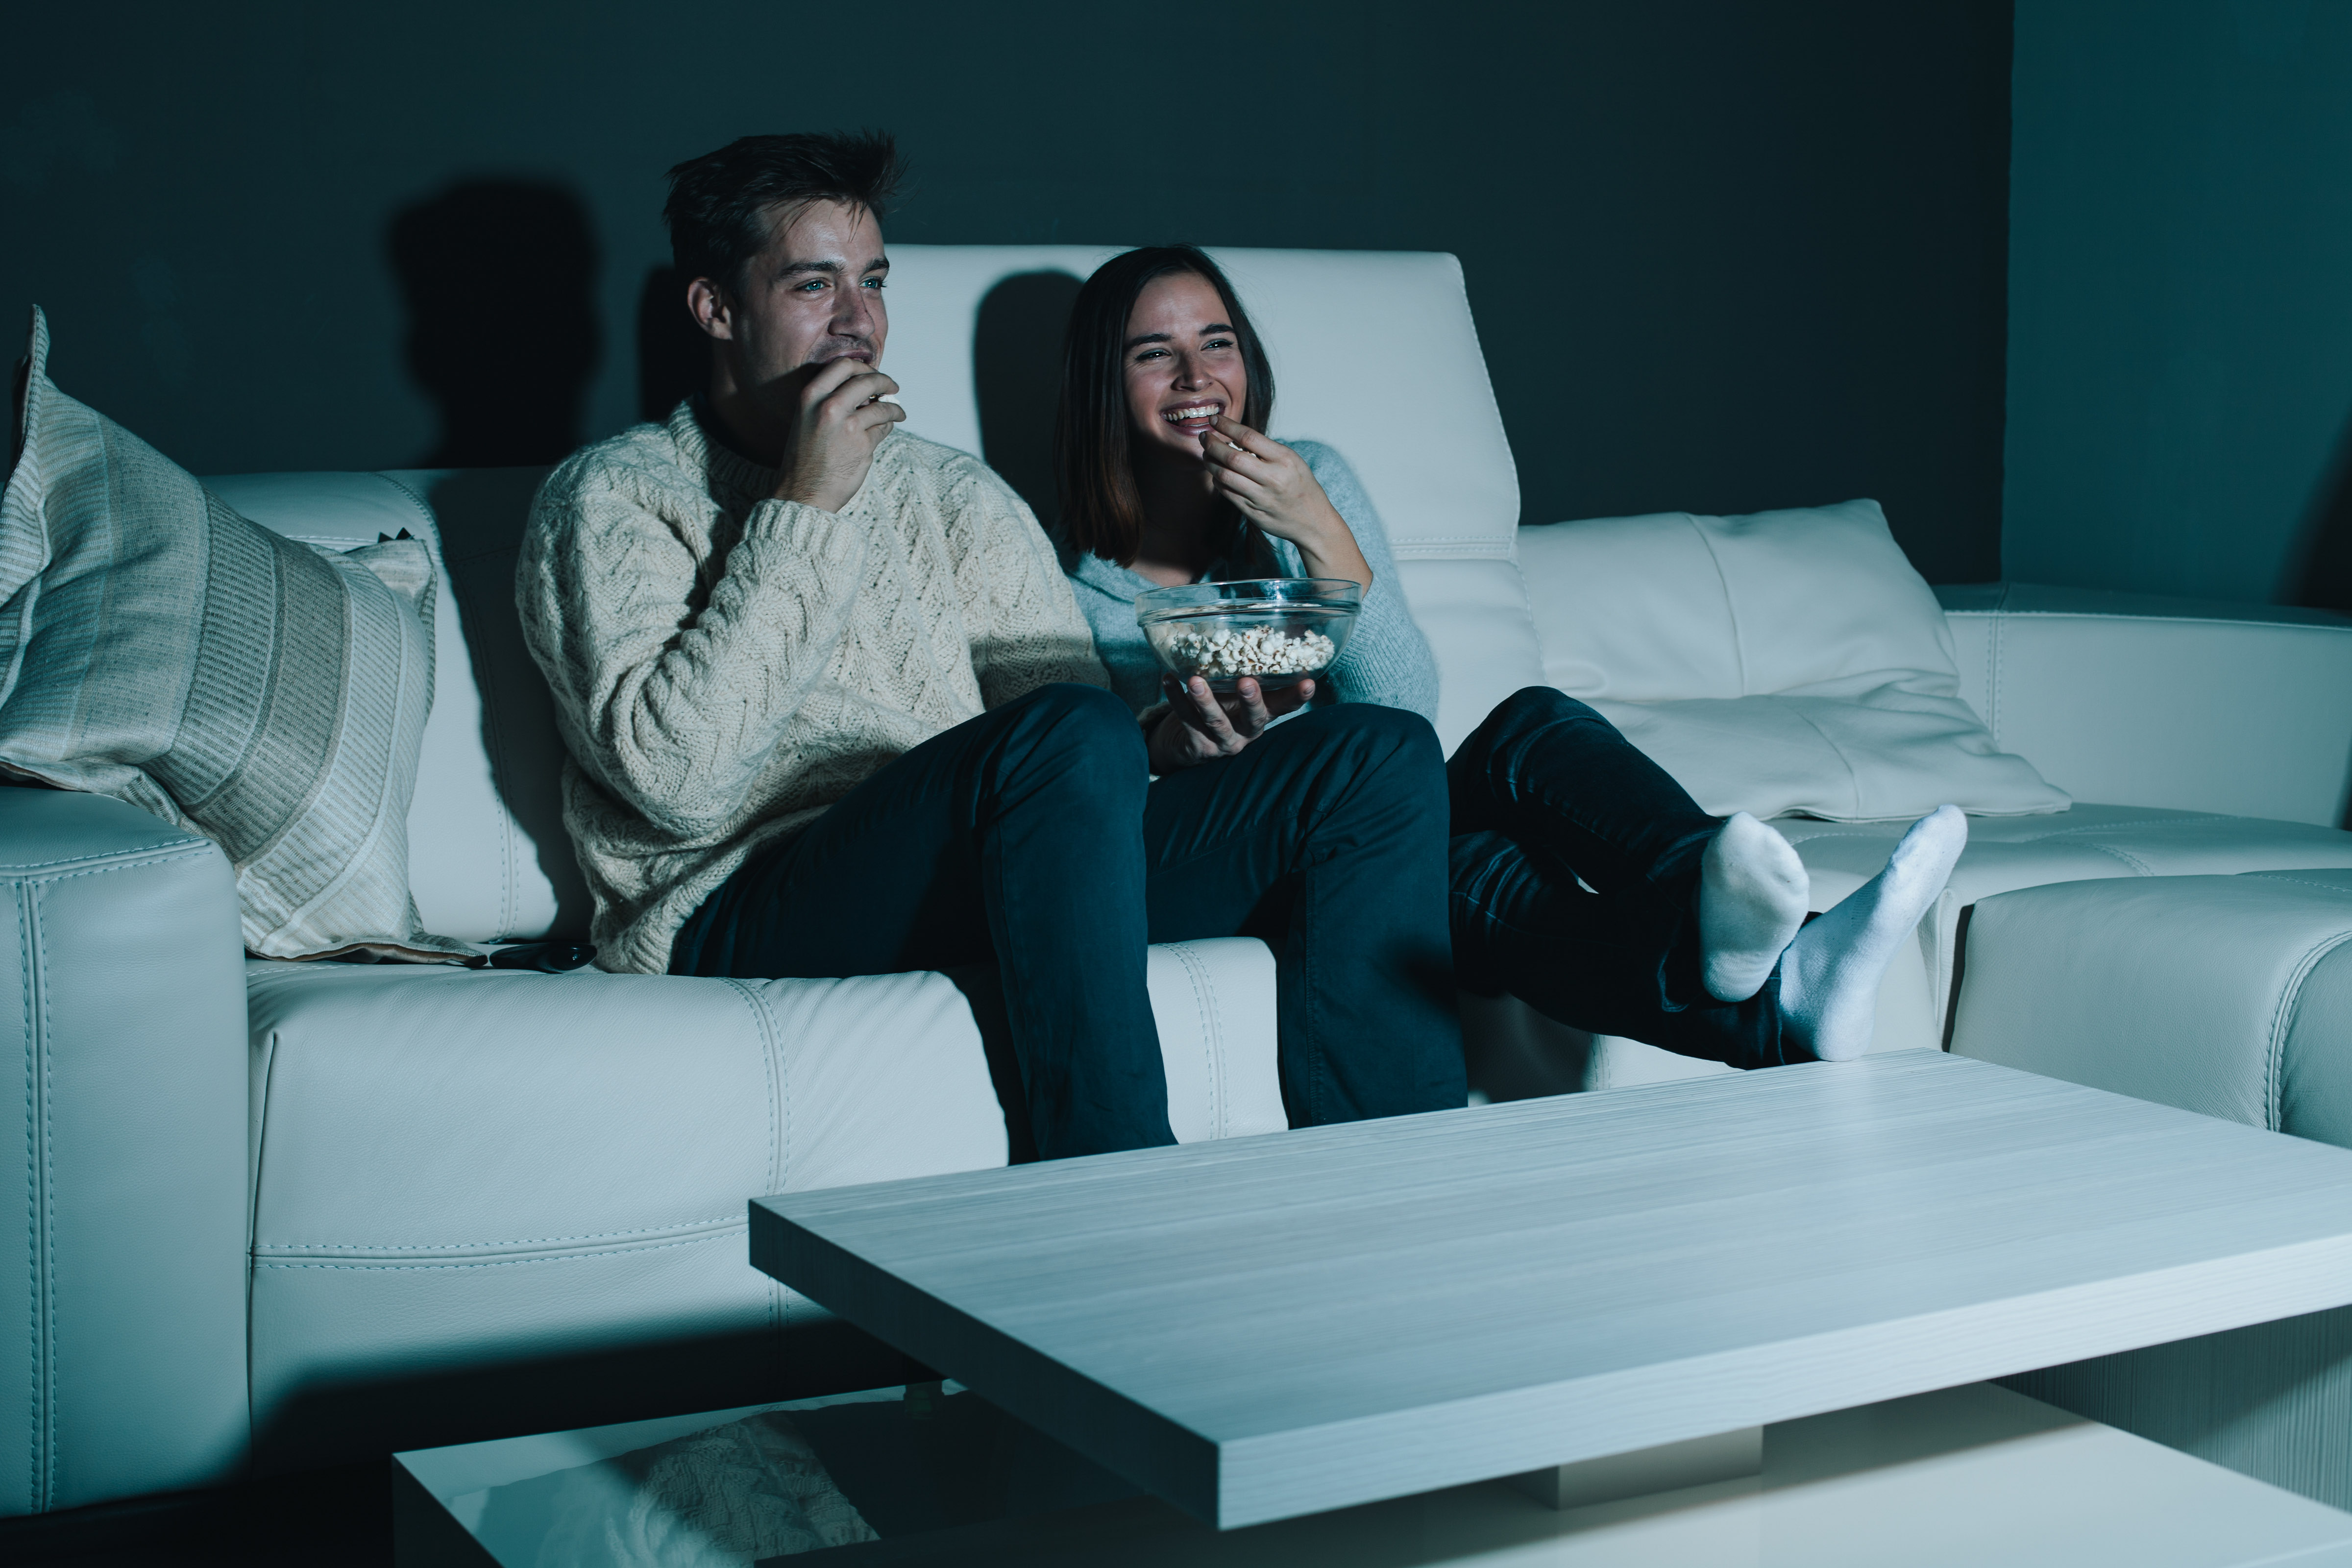 Watching performance. Парень и девушка на диване. Мужчина у телевизора. Пара на диване перед телевизором. Парень и девушка сидят на диване.